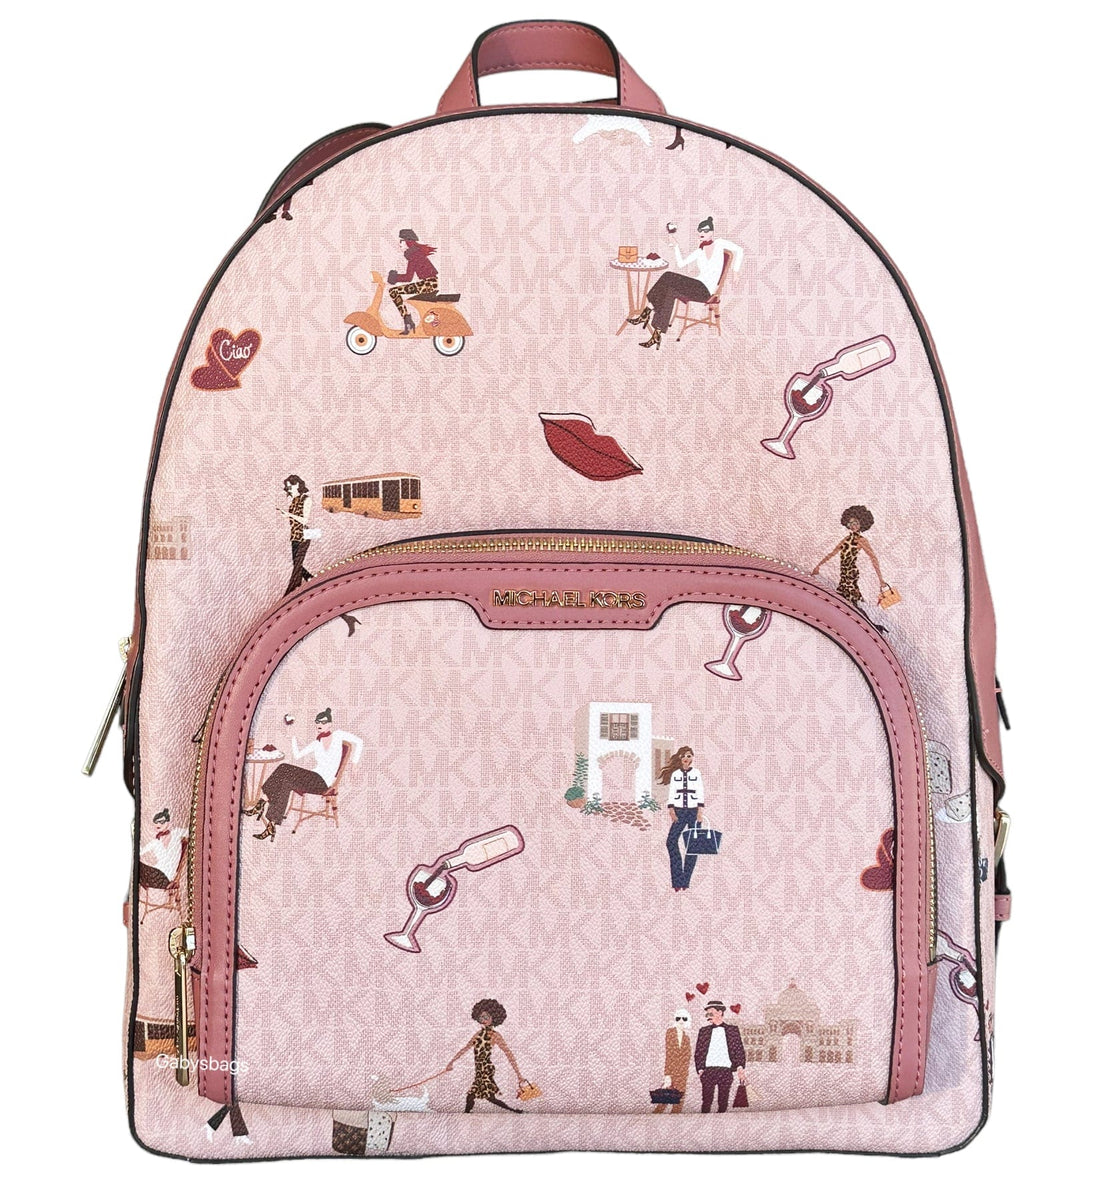 Michael Kors Jet Set Girls Jaycee Large Backpack School Bag Brown MK  Signature